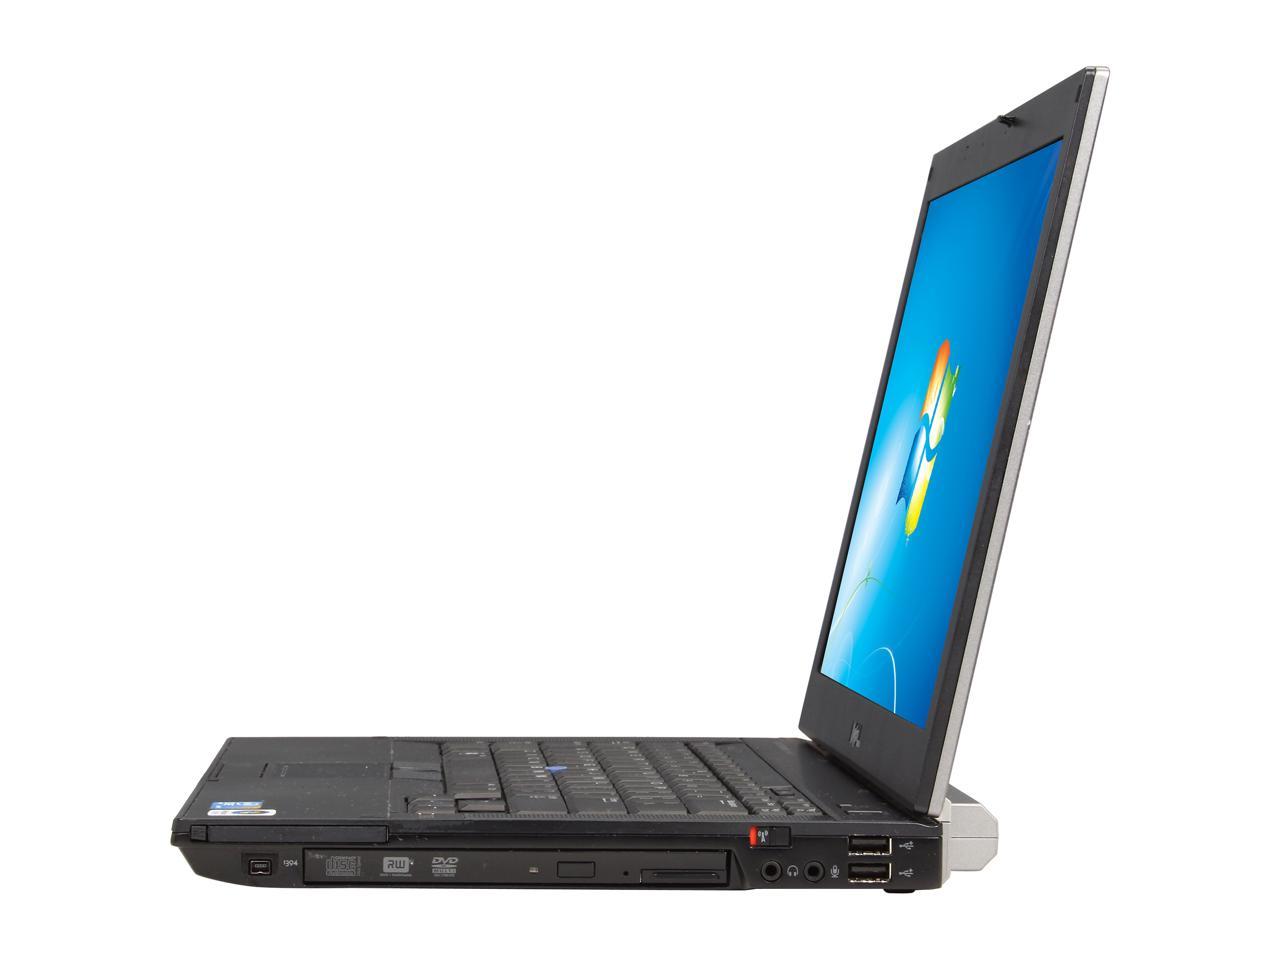 Refurbished: DELL Laptop E6410 Intel Core i7 1st Gen 640M (2.80GHz) 4GB